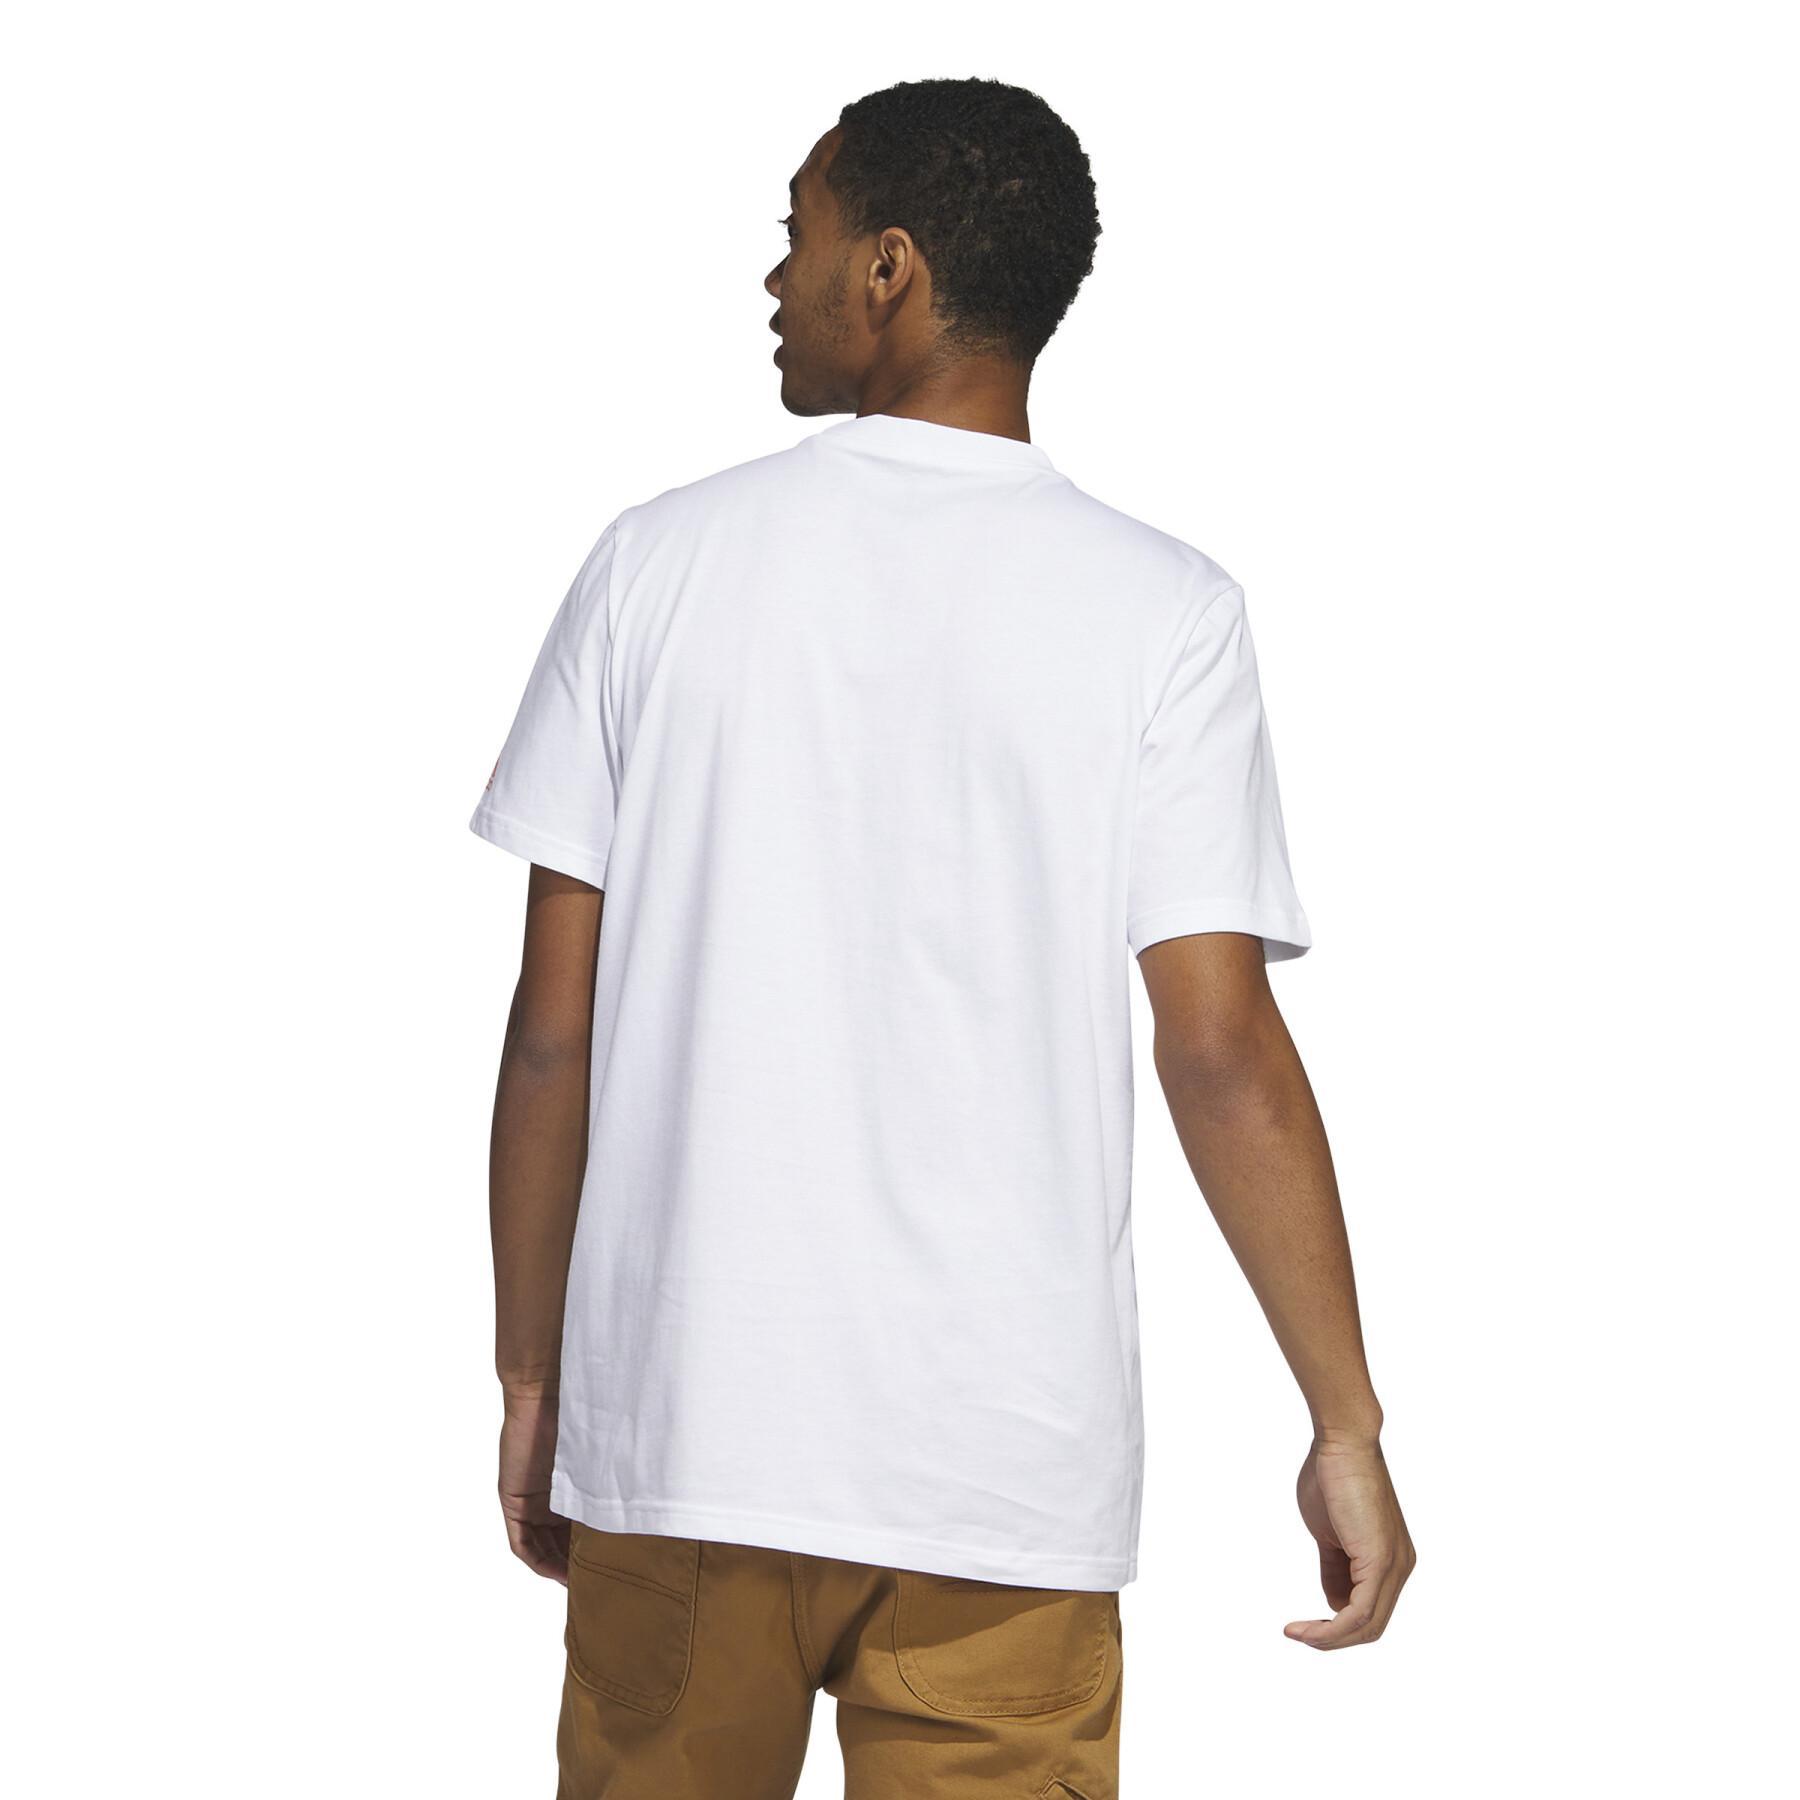 Camiseta adidas Linear Beach-Bit Graphic